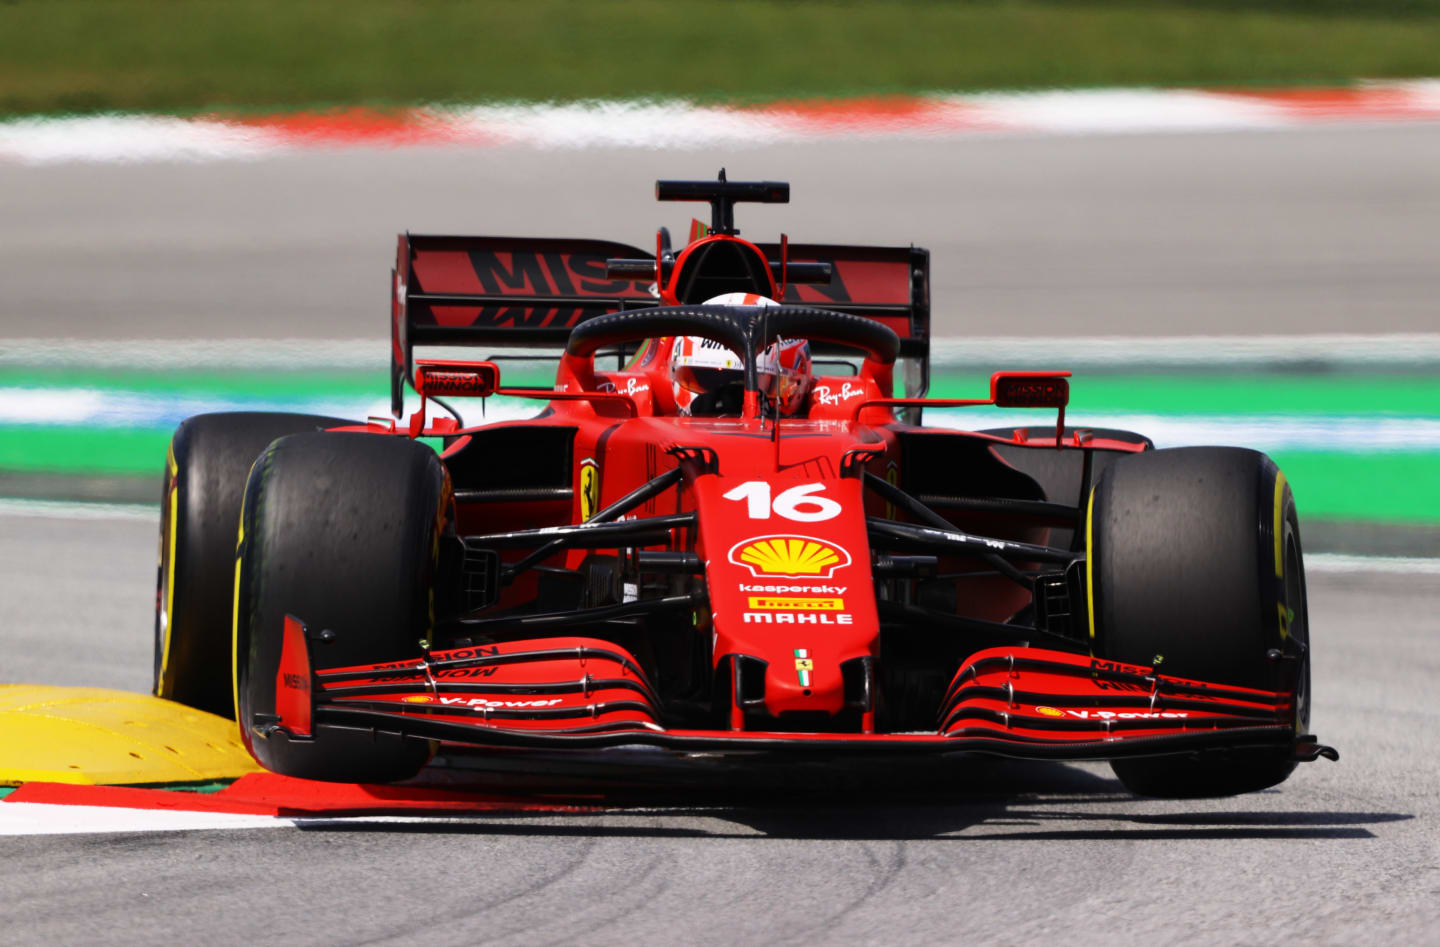 BARCELONA, SPAIN - MAY 07: Charles Leclerc of Monaco driving the (16) Scuderia Ferrari SF21 on